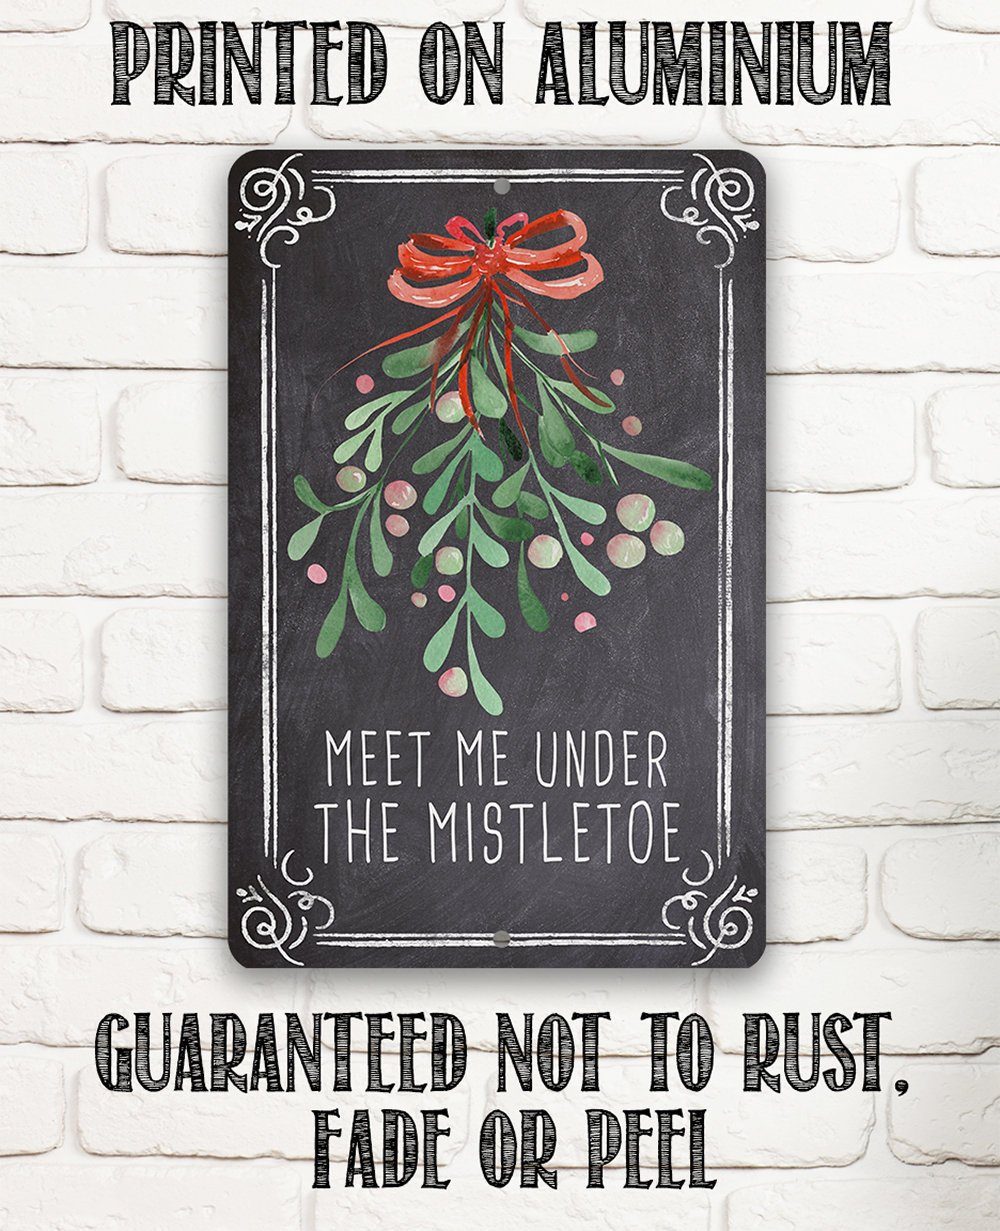 Meet Me Under The Mistletoe Sign